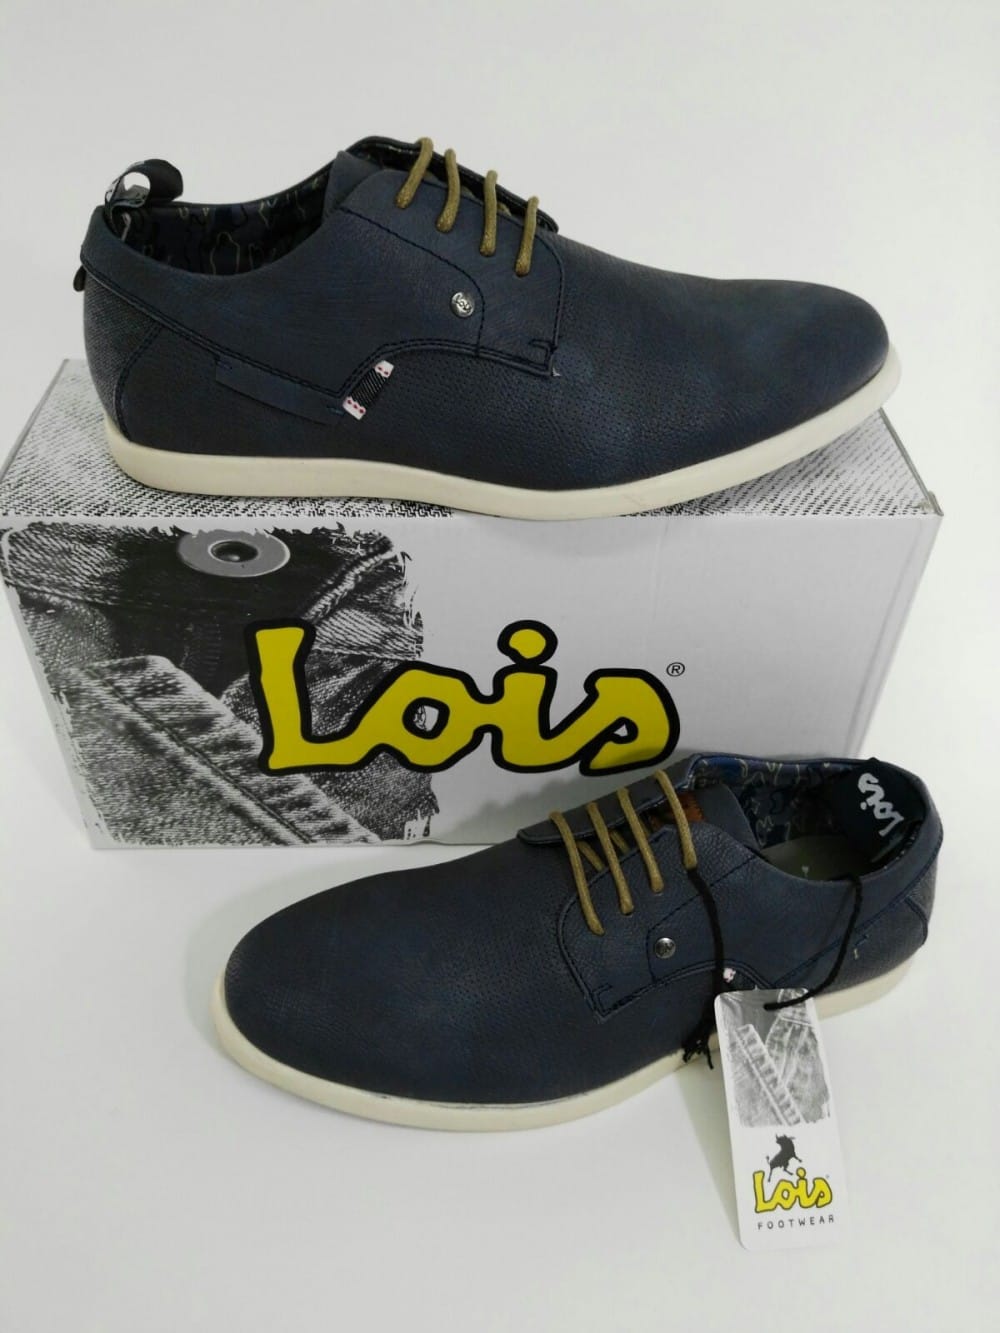 Zapato sport Lois - Calzados Grau